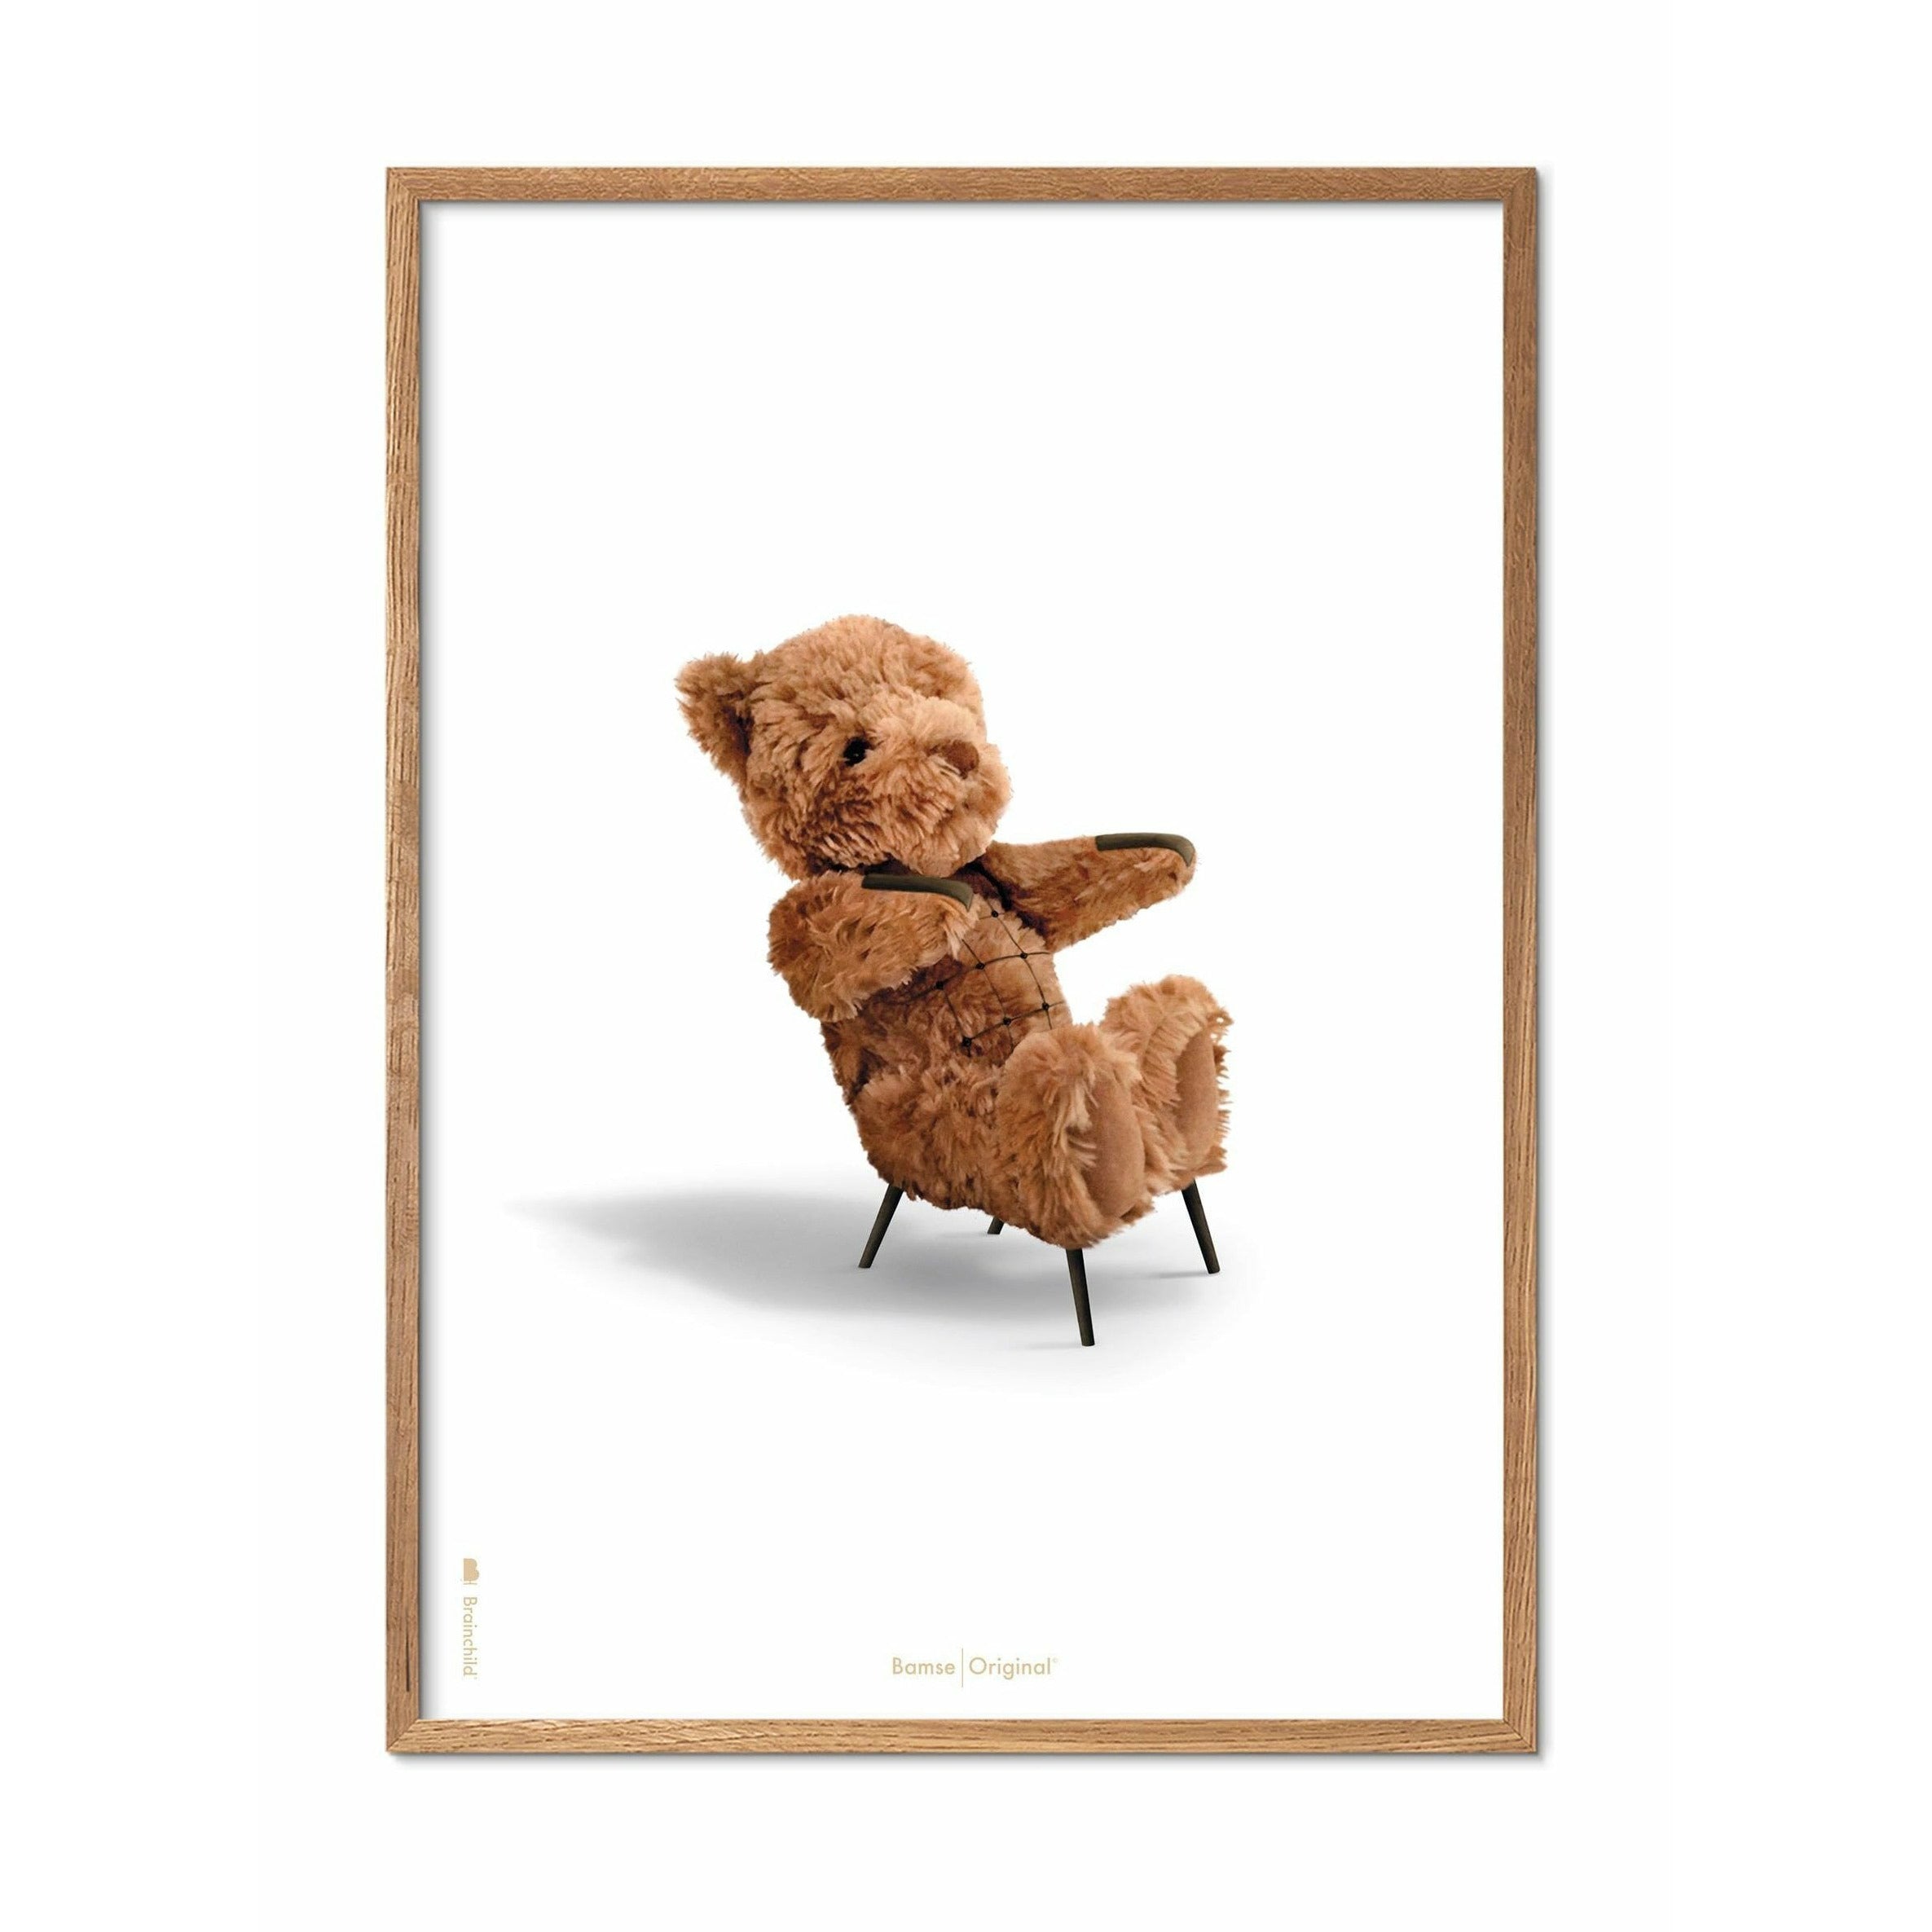 Brainchild Teddy Bear Classic Poster, Frame Made Of Light Wood 70x100 Cm, White Background